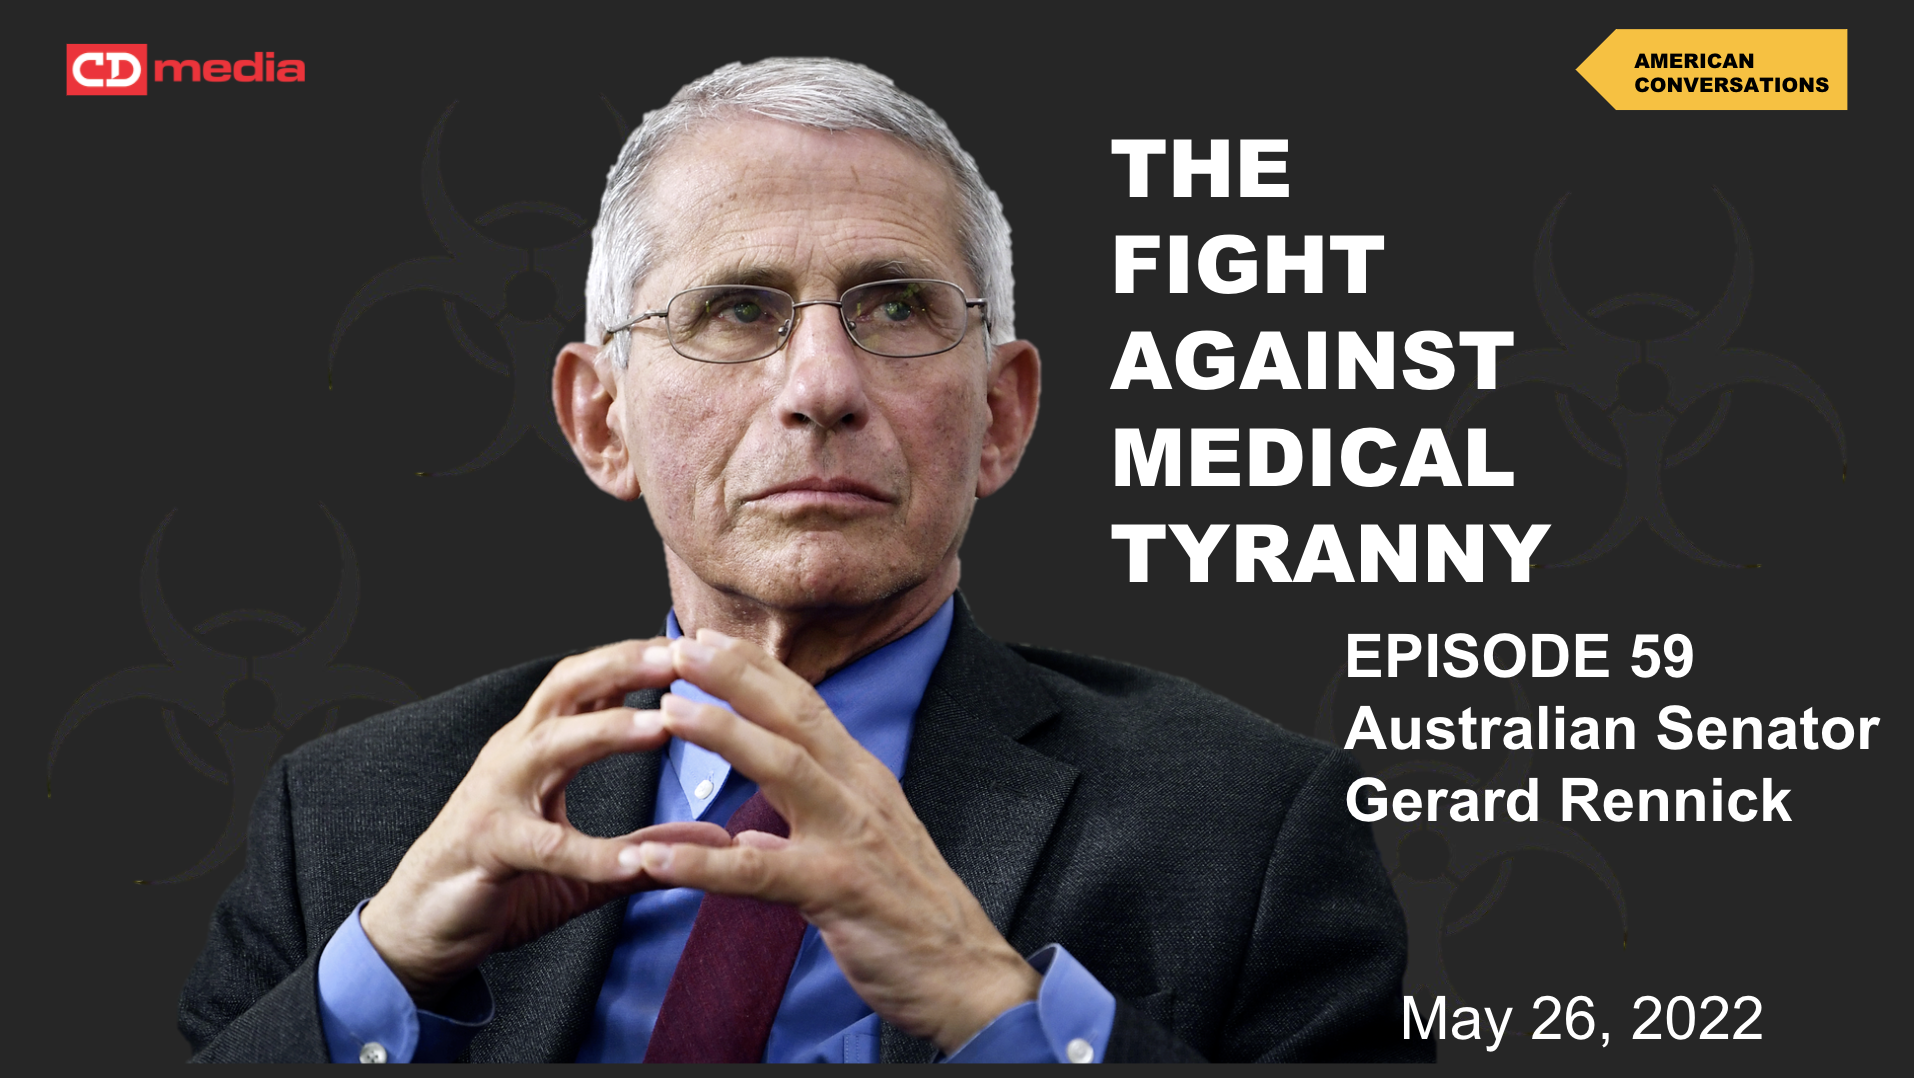 Episode 59 - Fight Against Medical Tyranny - Australian Senator Gerard Rennick